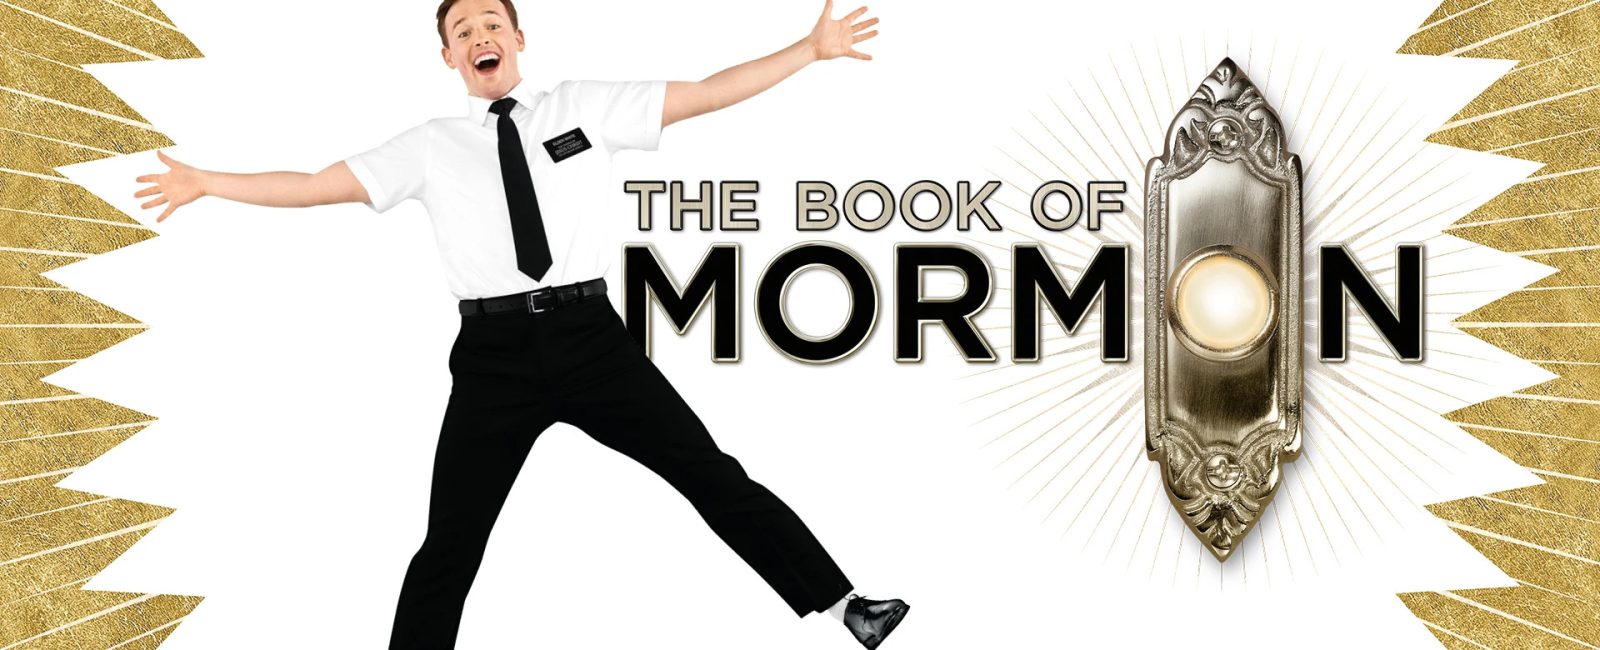 the book of mormon - zurich 2025